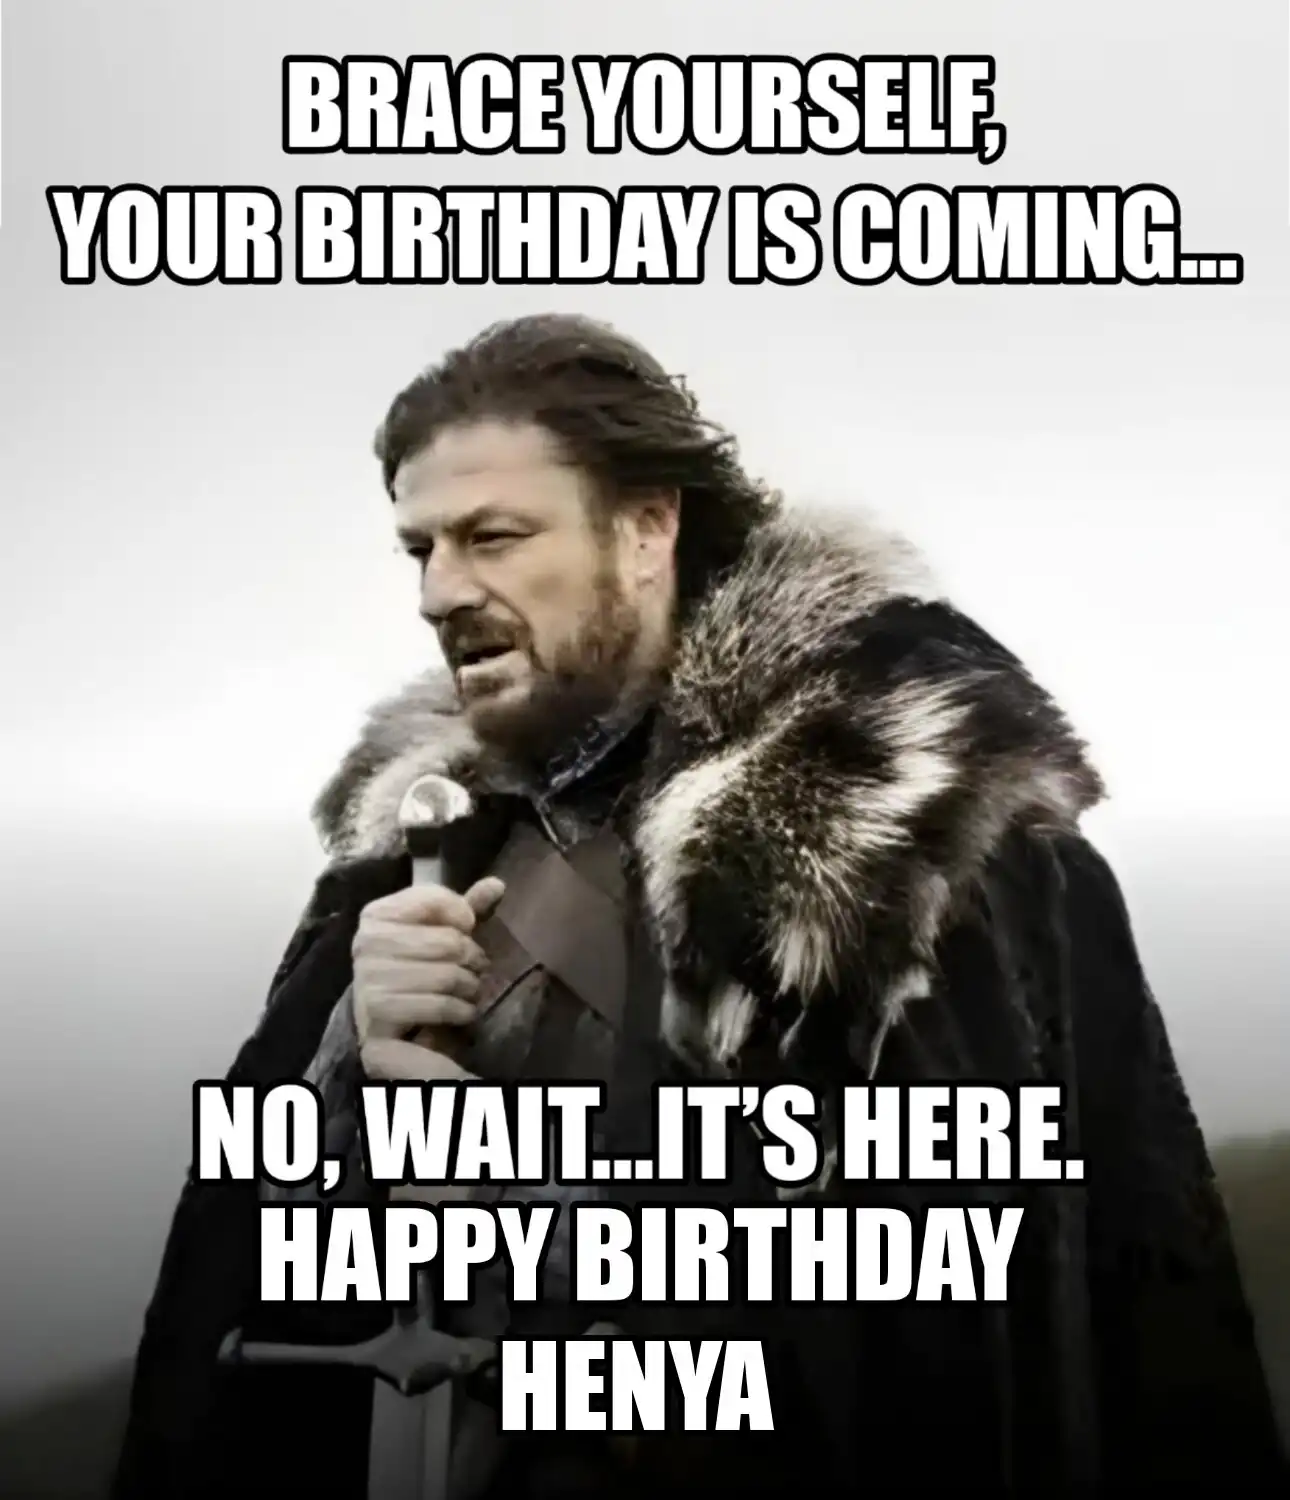 Happy Birthday Henya Brace Yourself Your Birthday Is Coming Meme